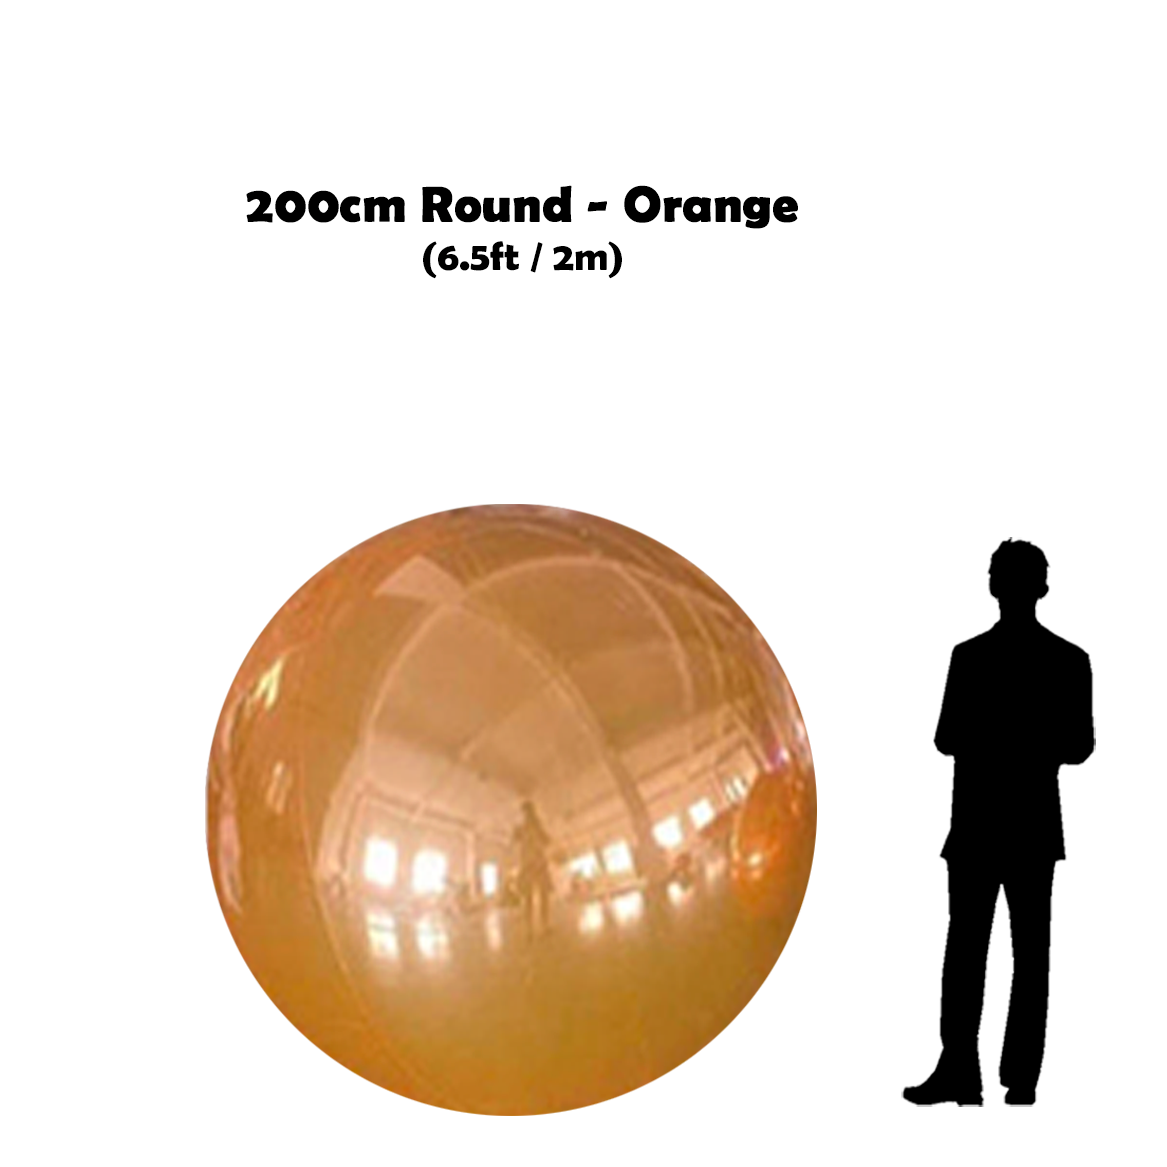 200 cm Big orange ball beside 5'10 guy silhouette 